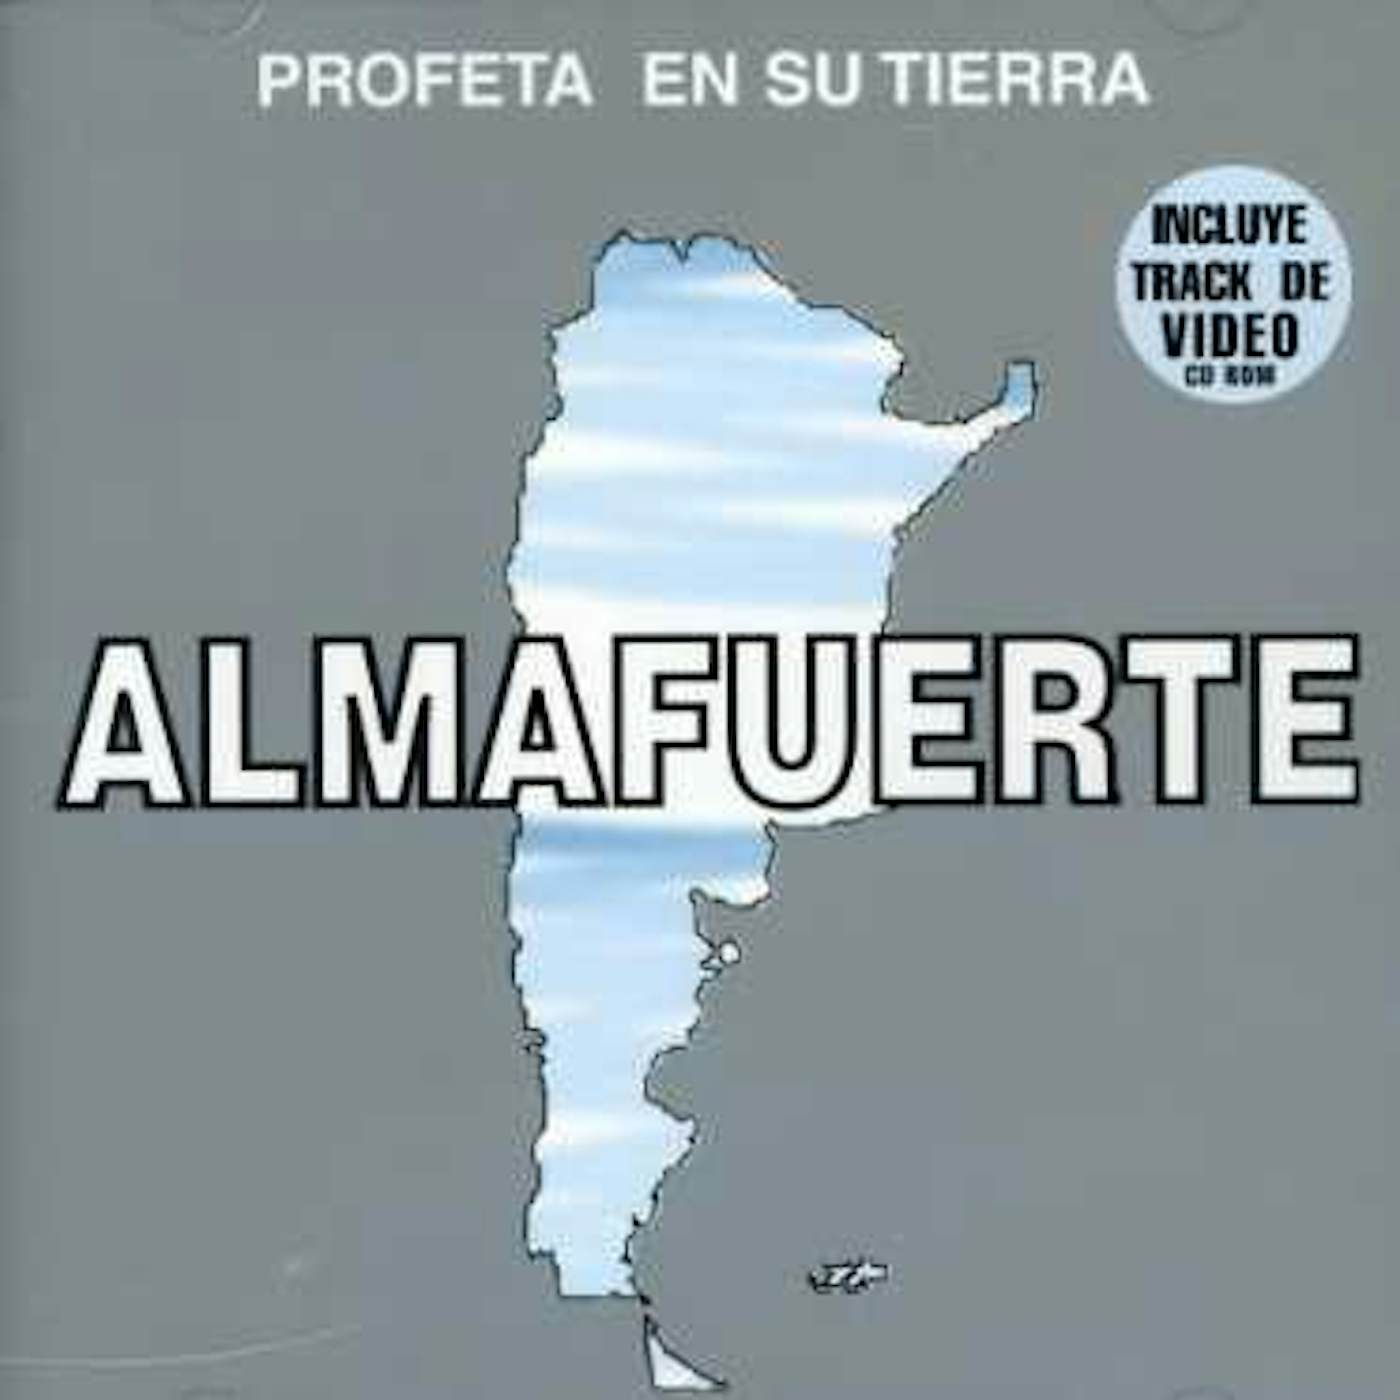 Almafuerte PROFETA EN SU TIERRA CD